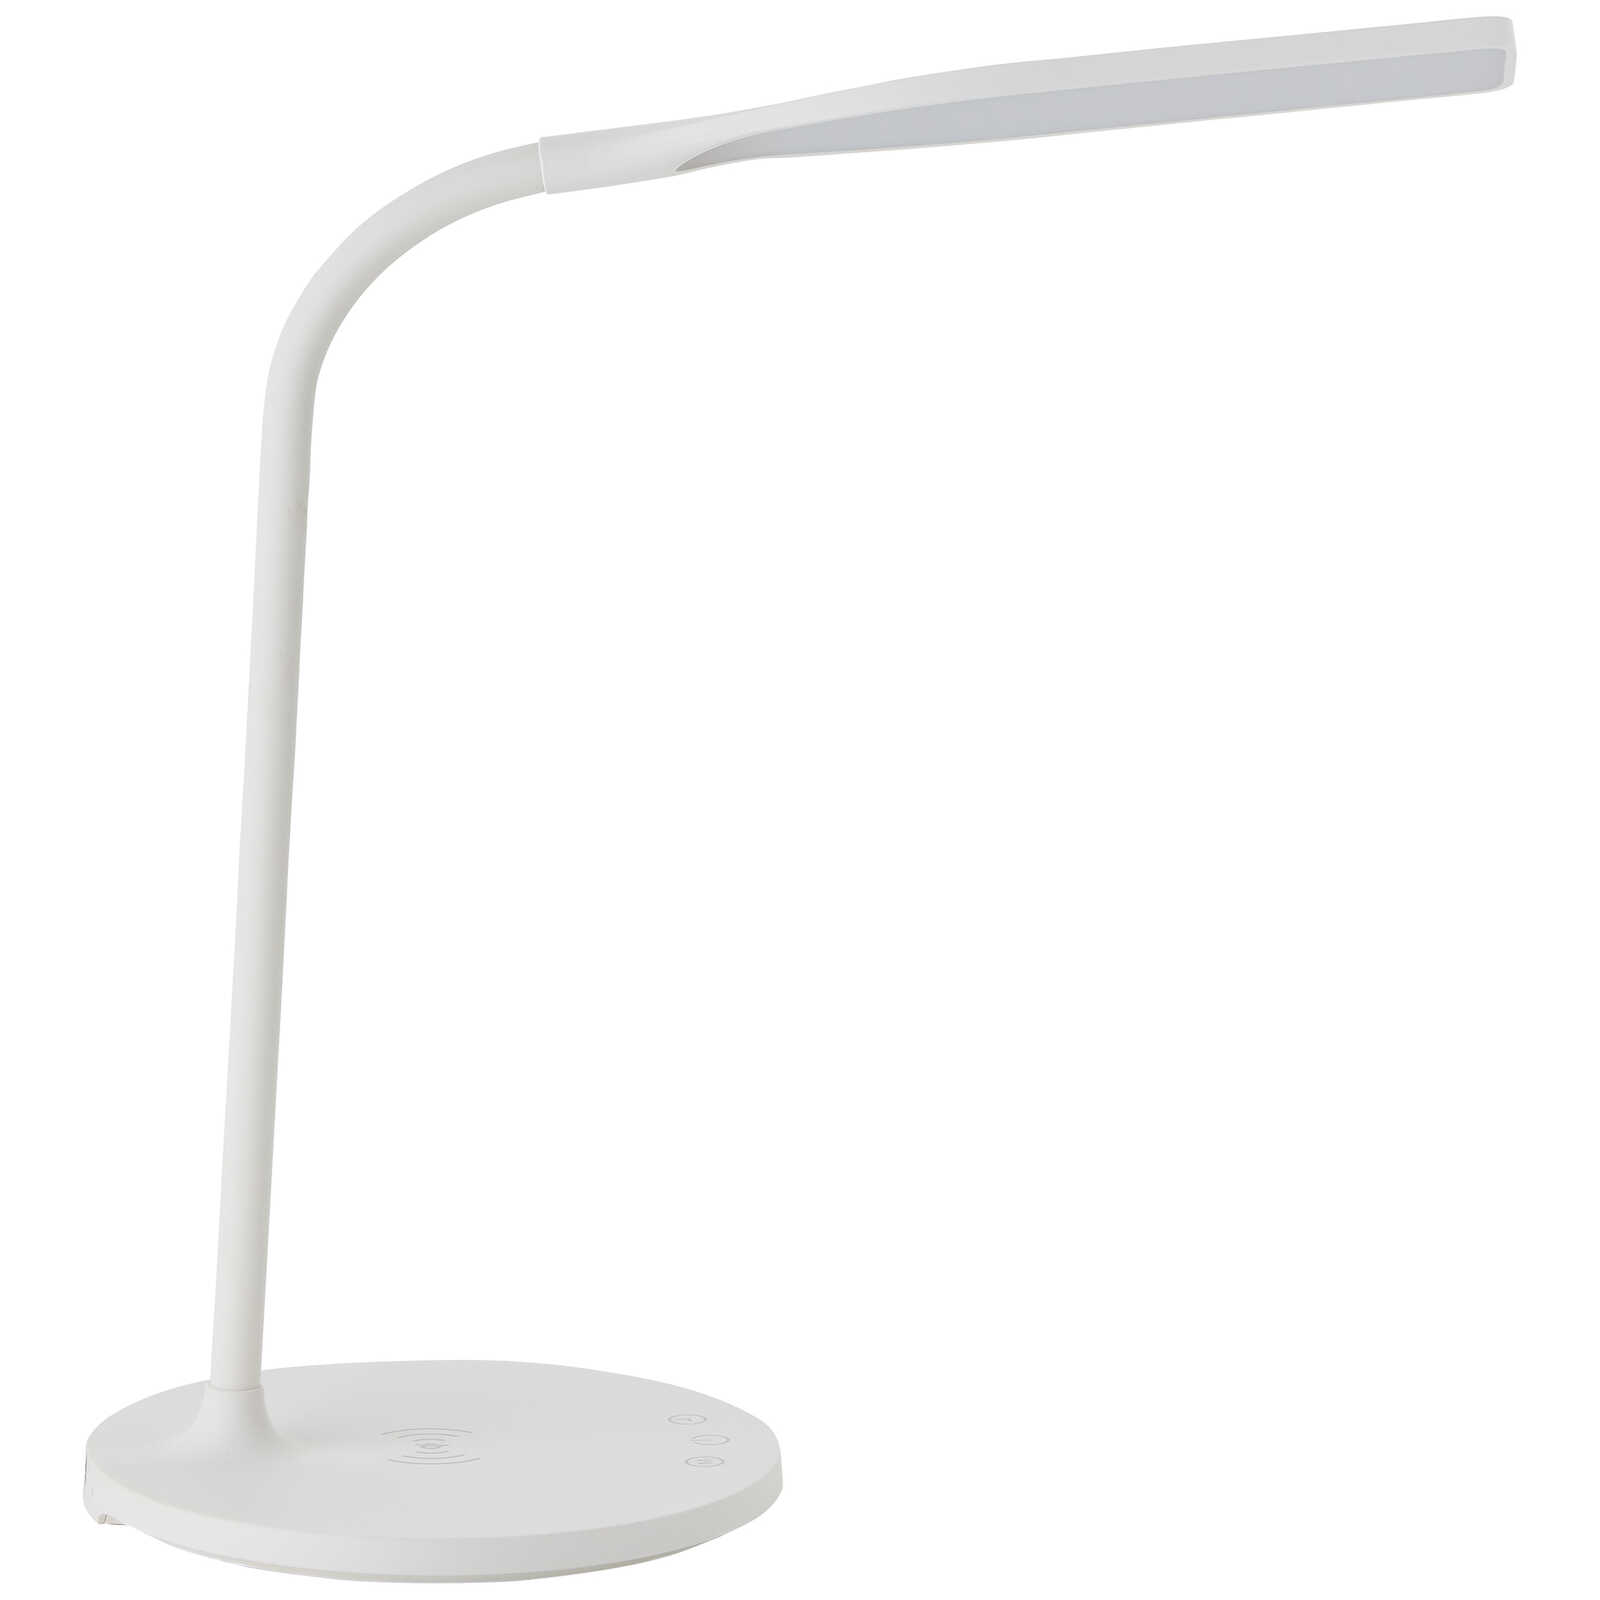             Plastic table lamp - Joy - White
        